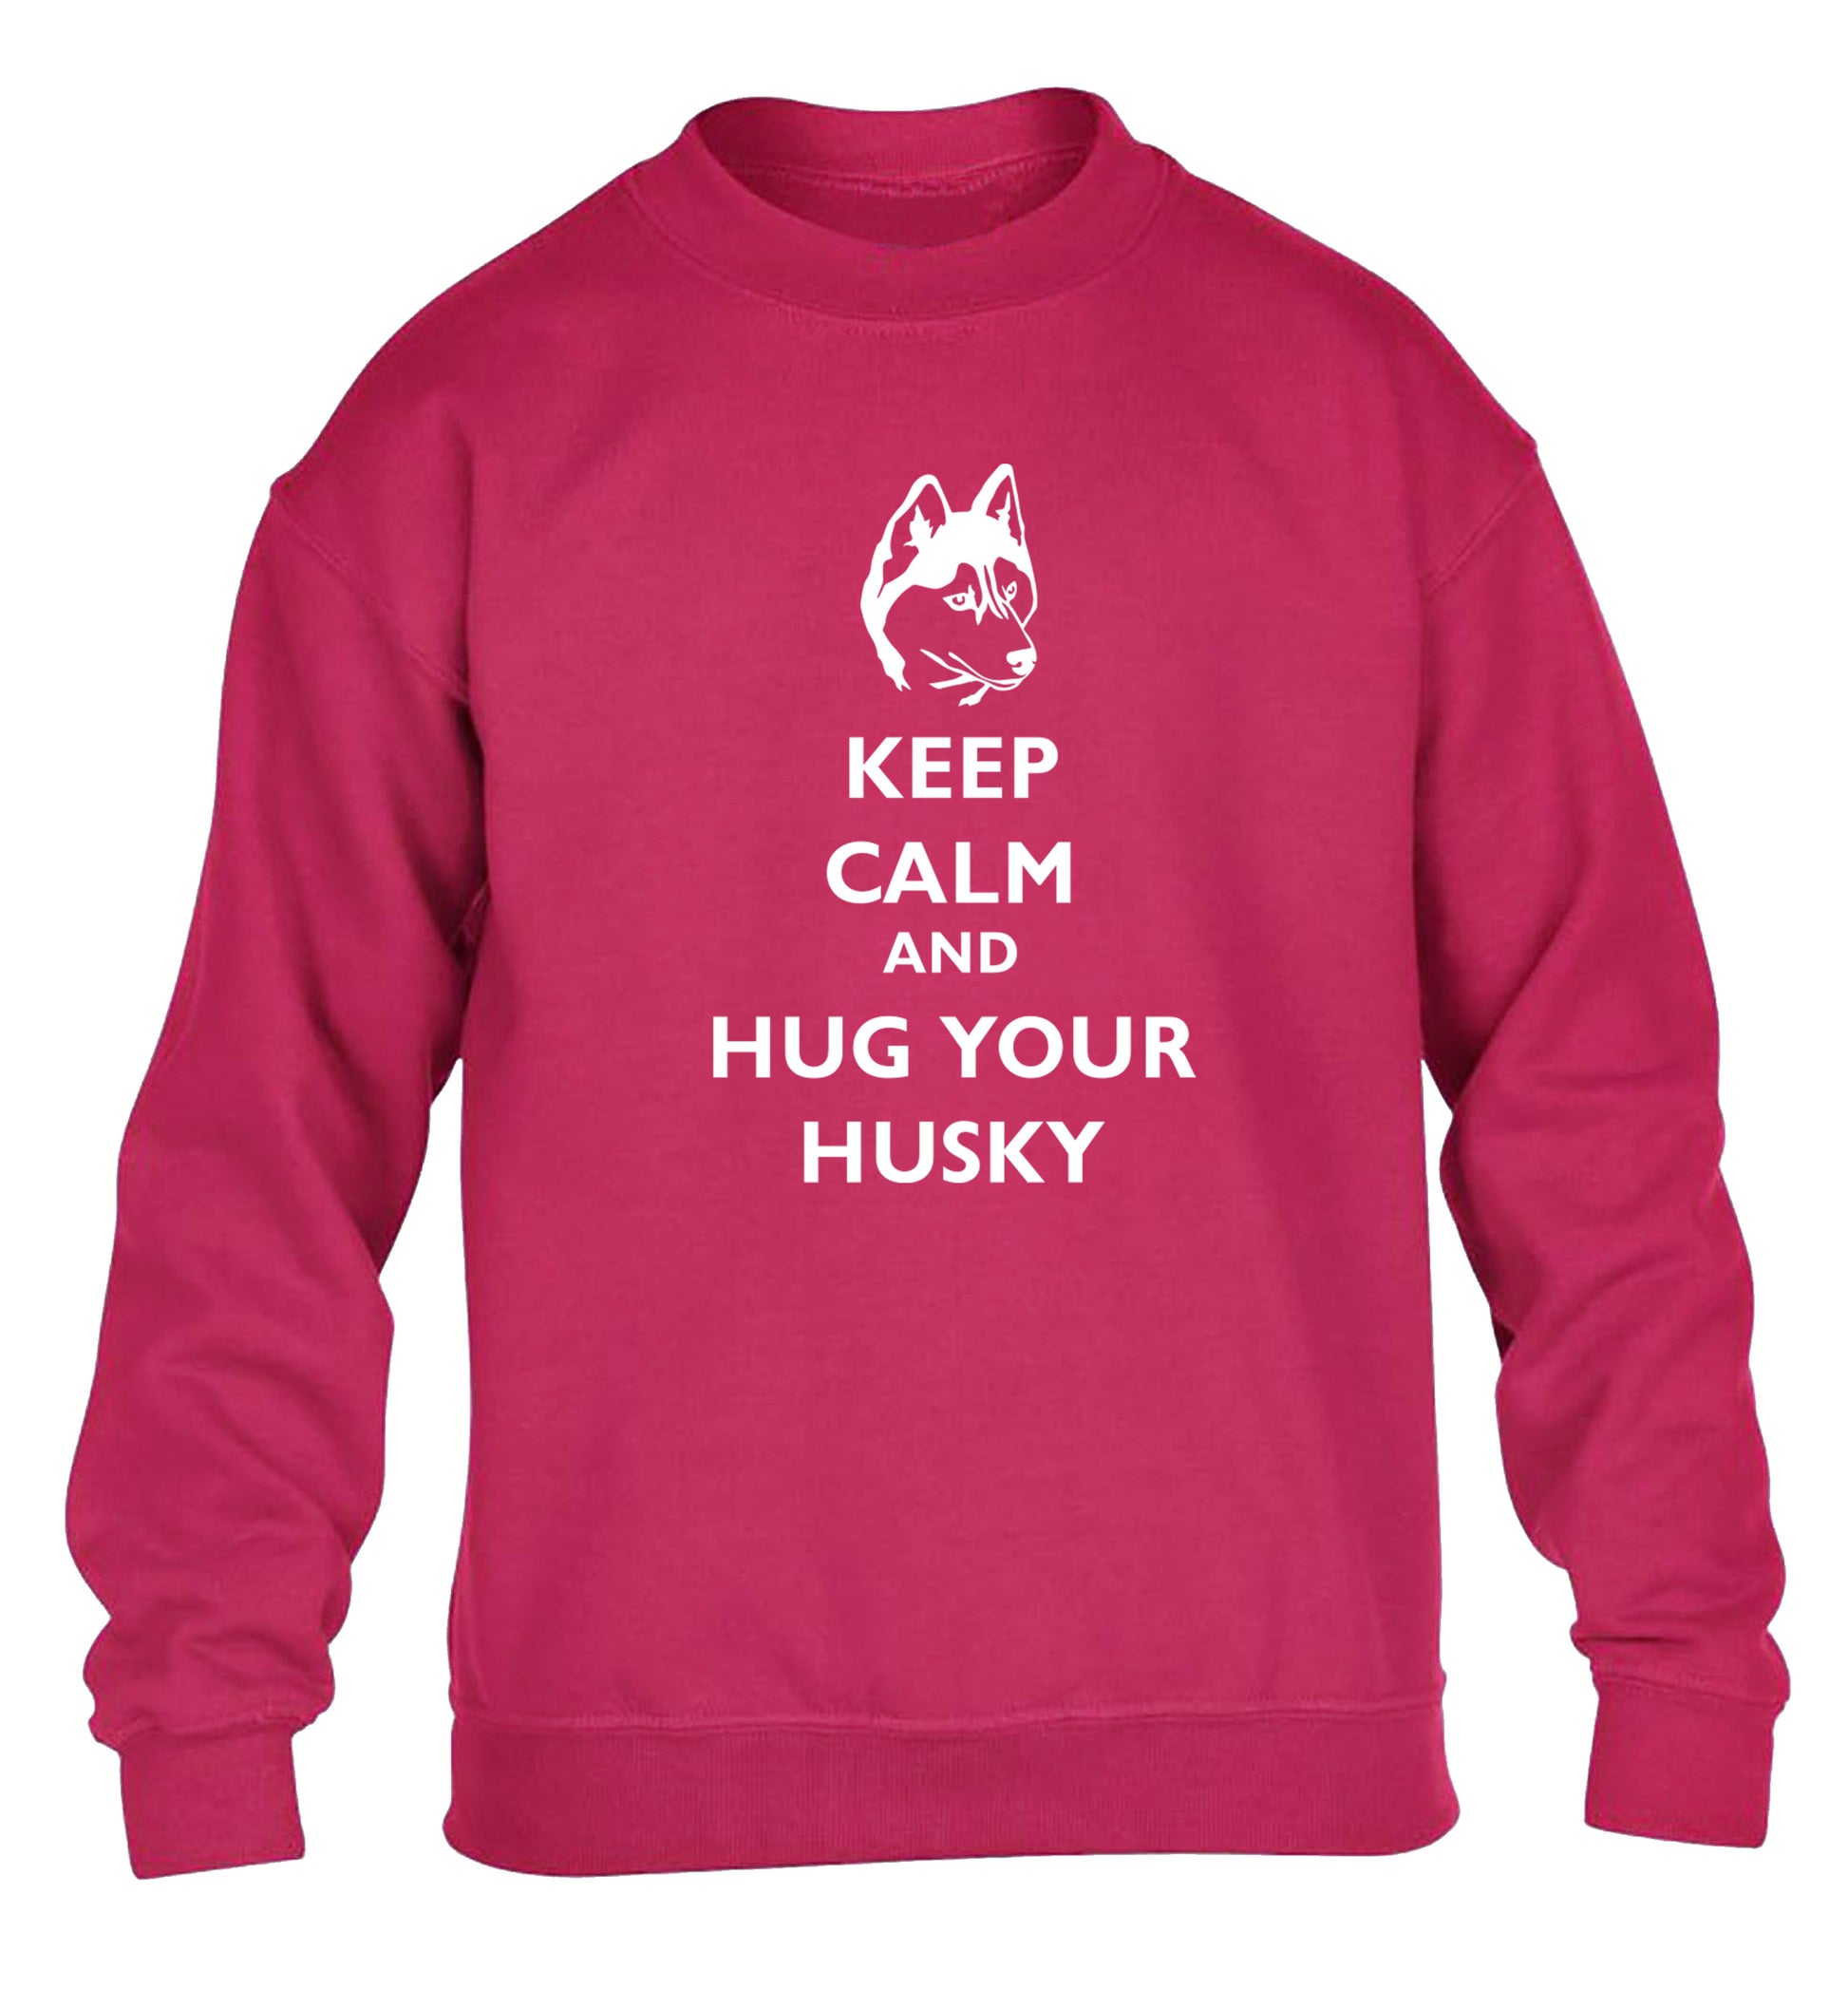 Keep calm and hug your husky children's pink sweater 12-13 Years